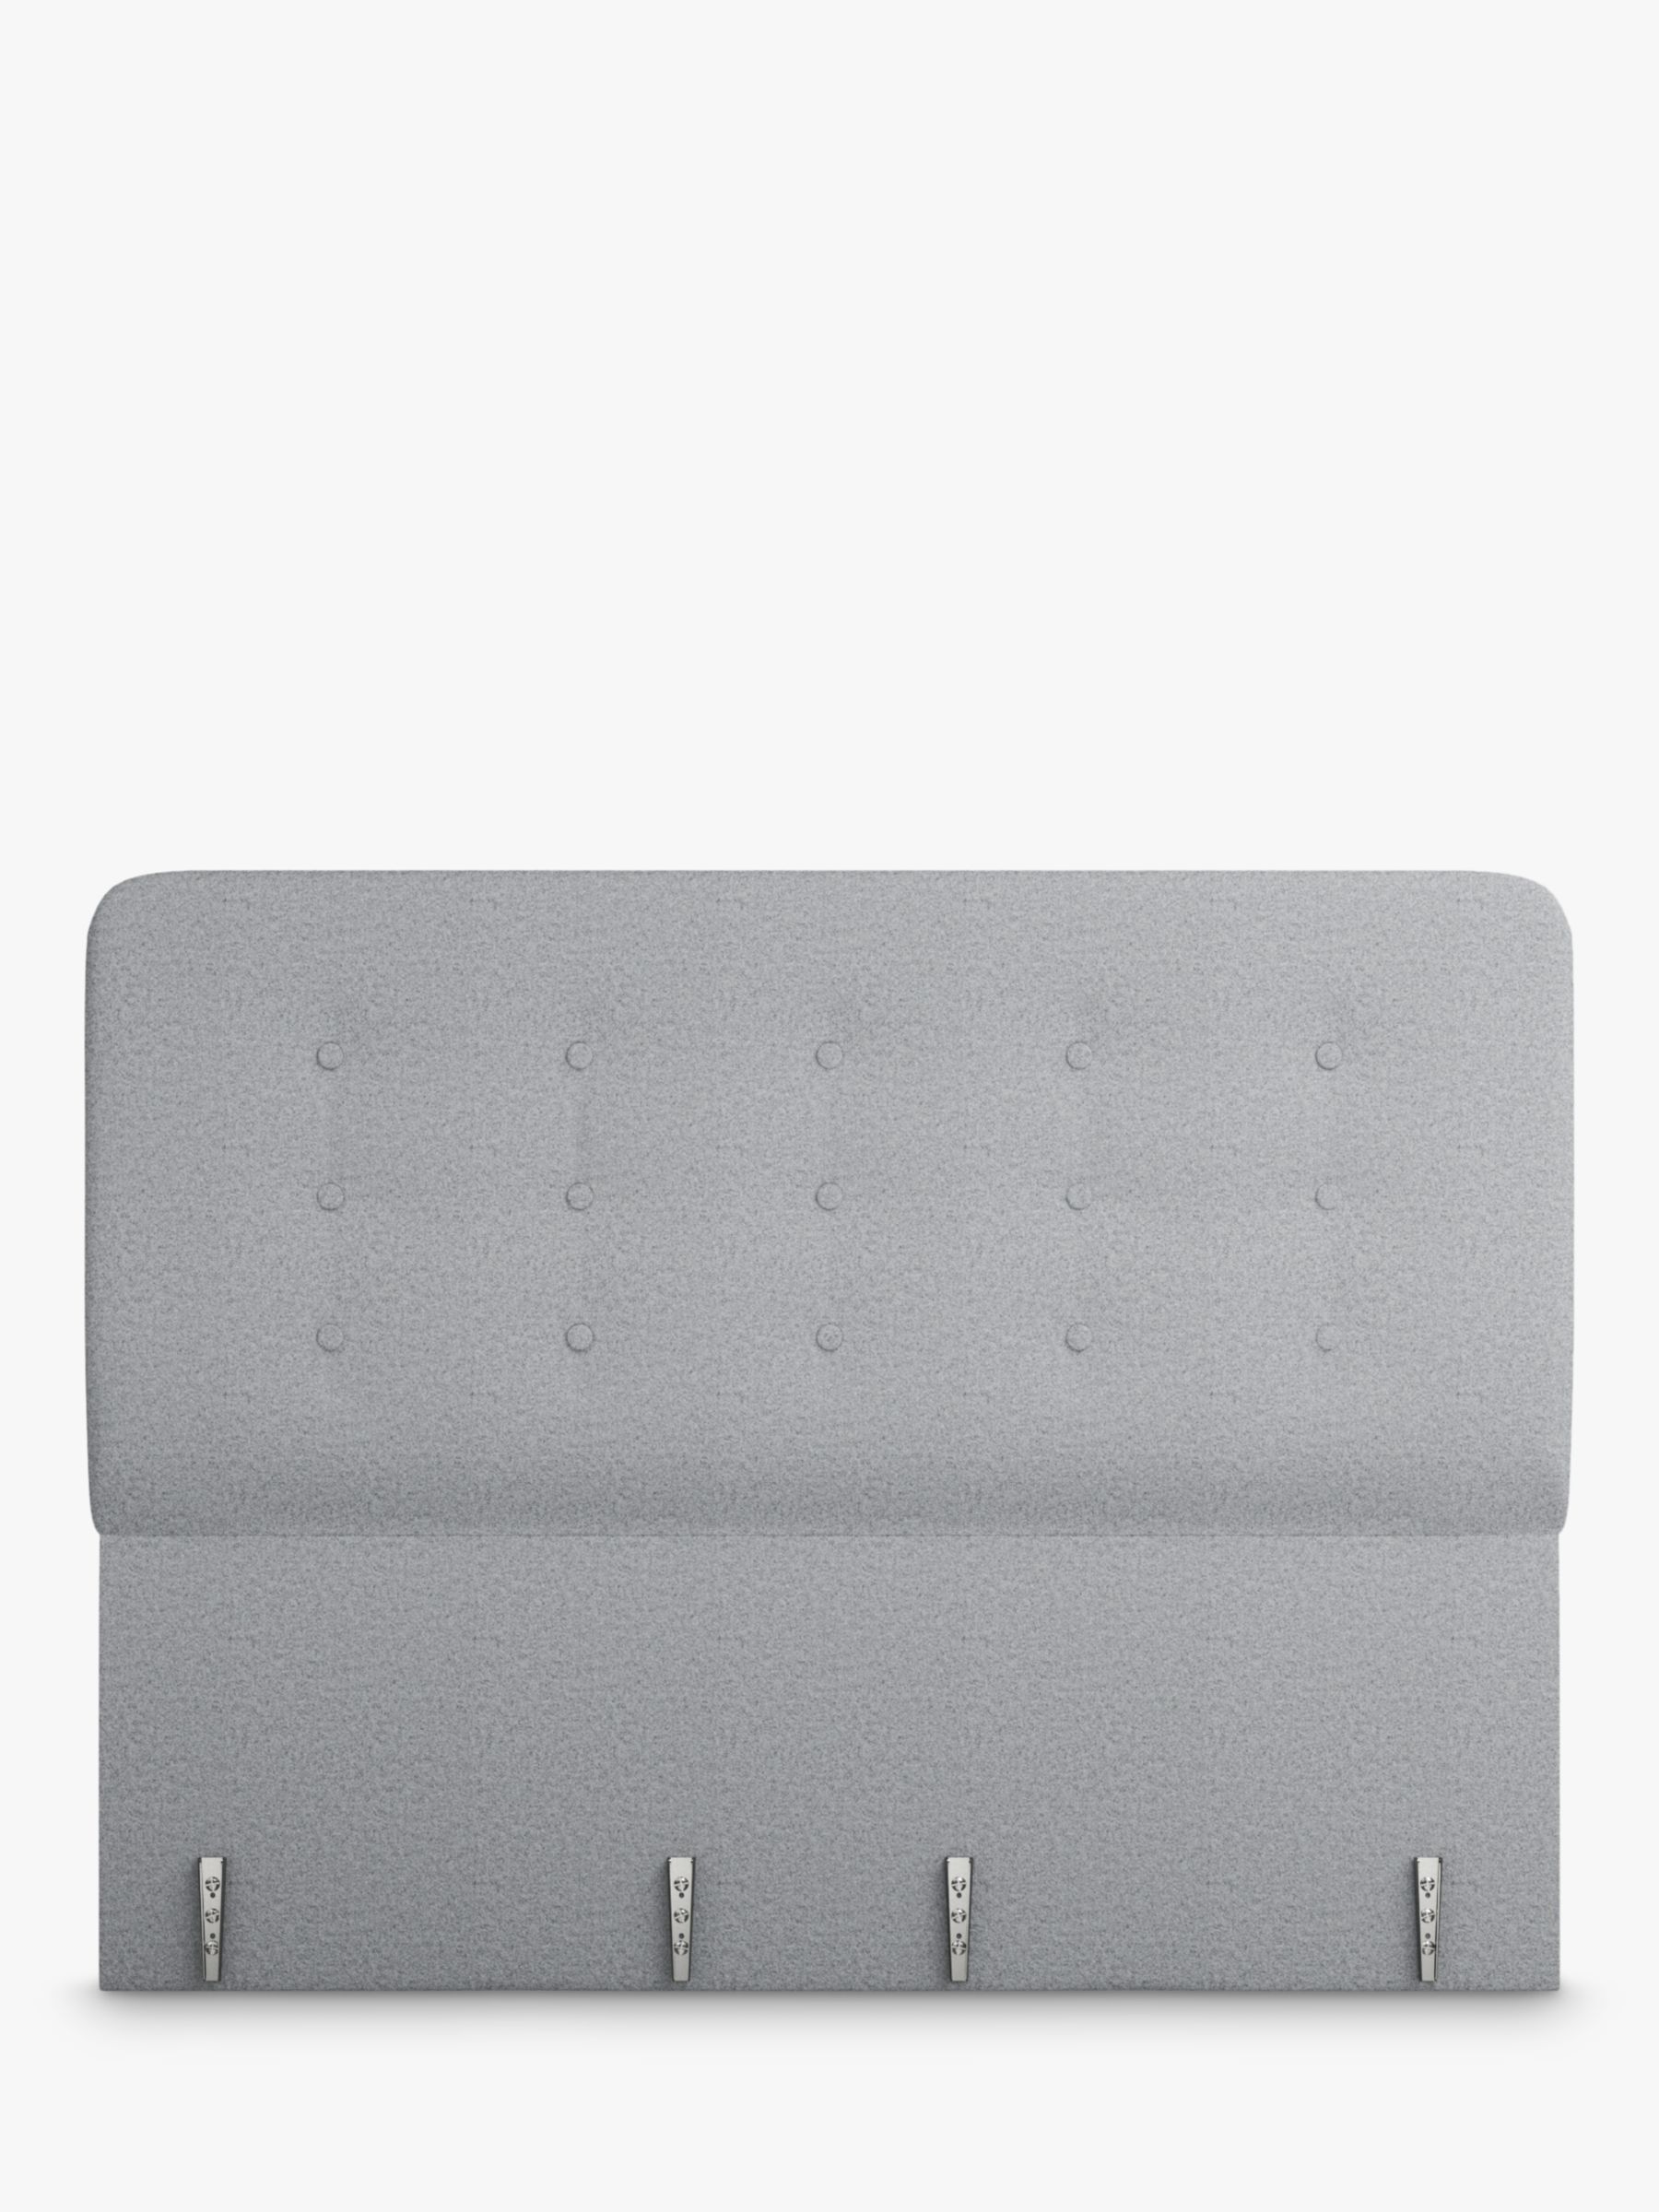 Photo of Vispring clio full depth upholstered headboard super king size fsc-certified -chipboard-